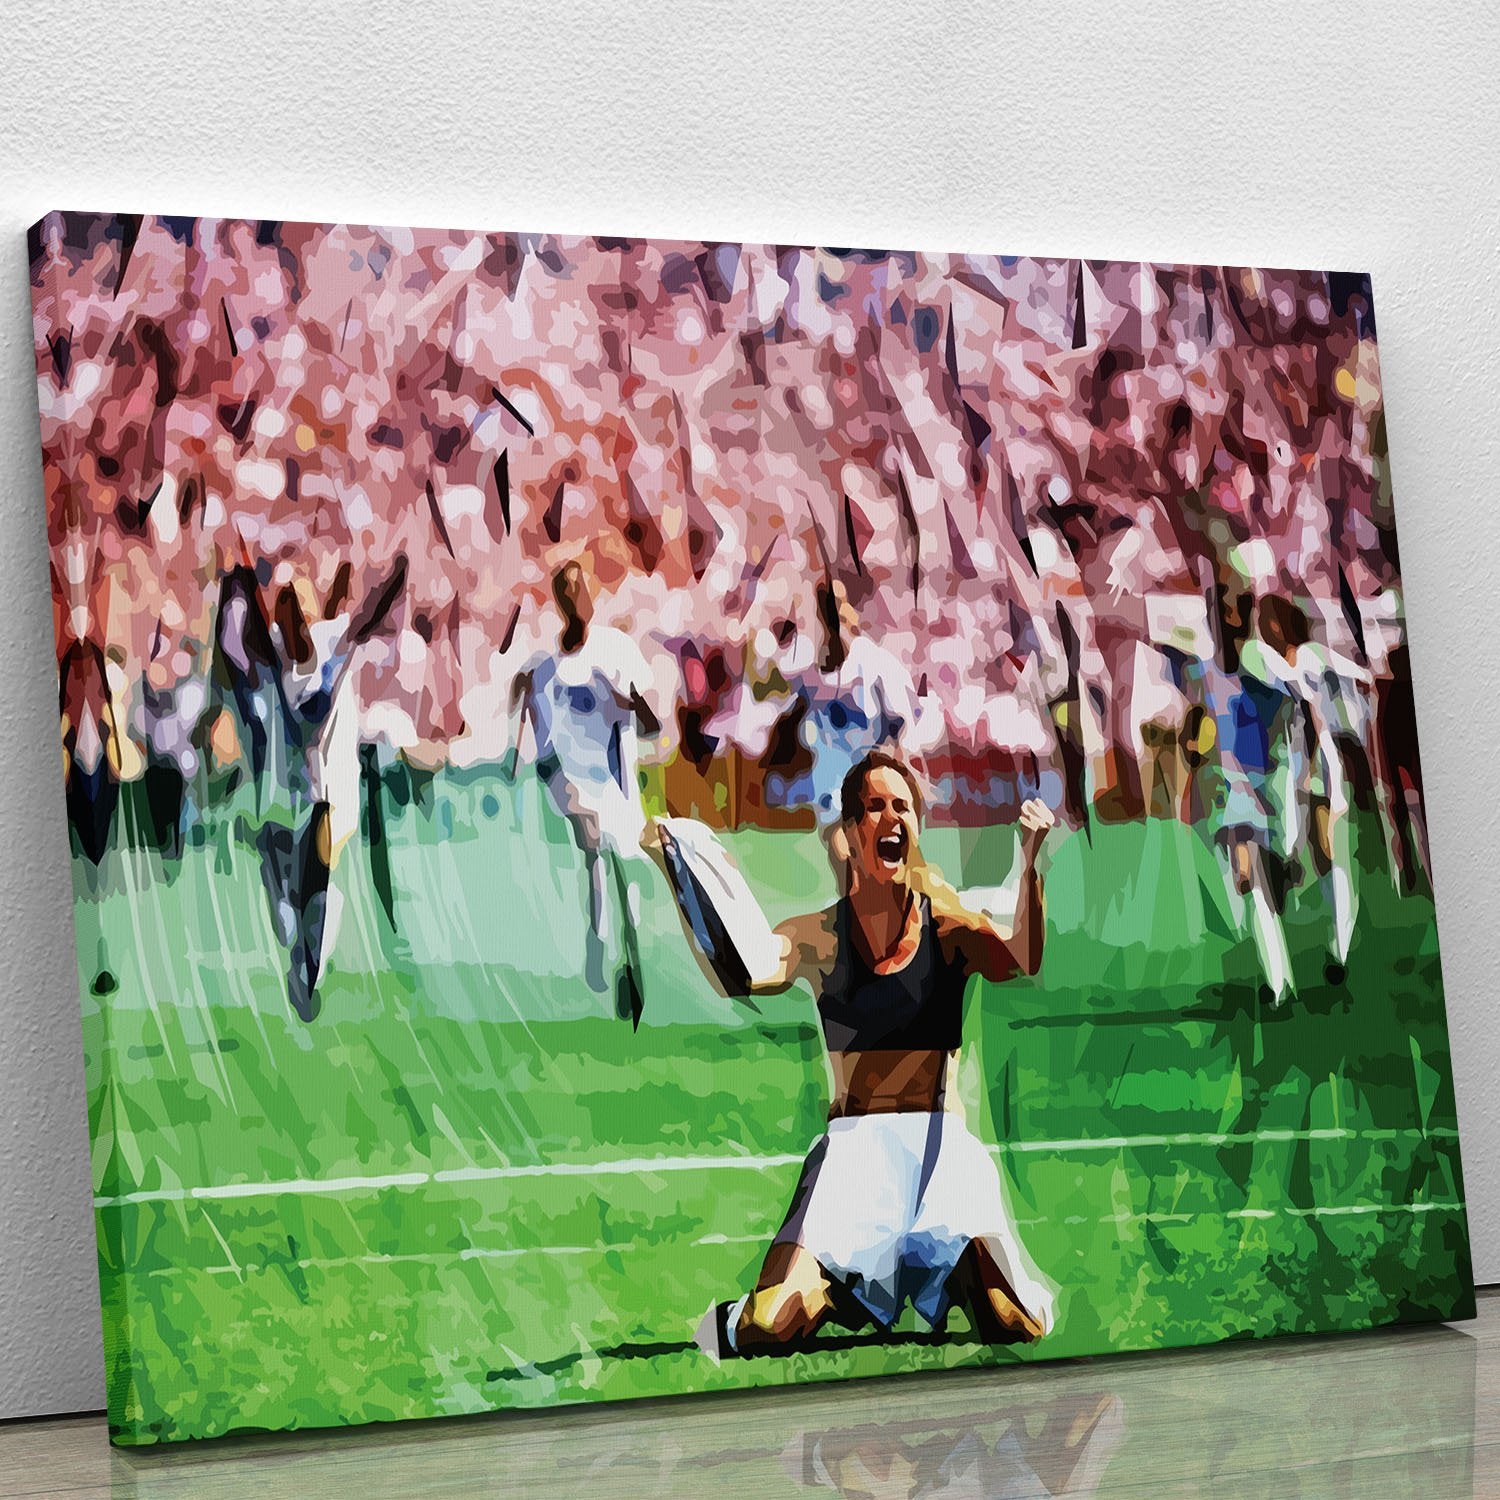 Brandi Chastain Celebrates USA Soccer 1999 Canvas Print or Poster